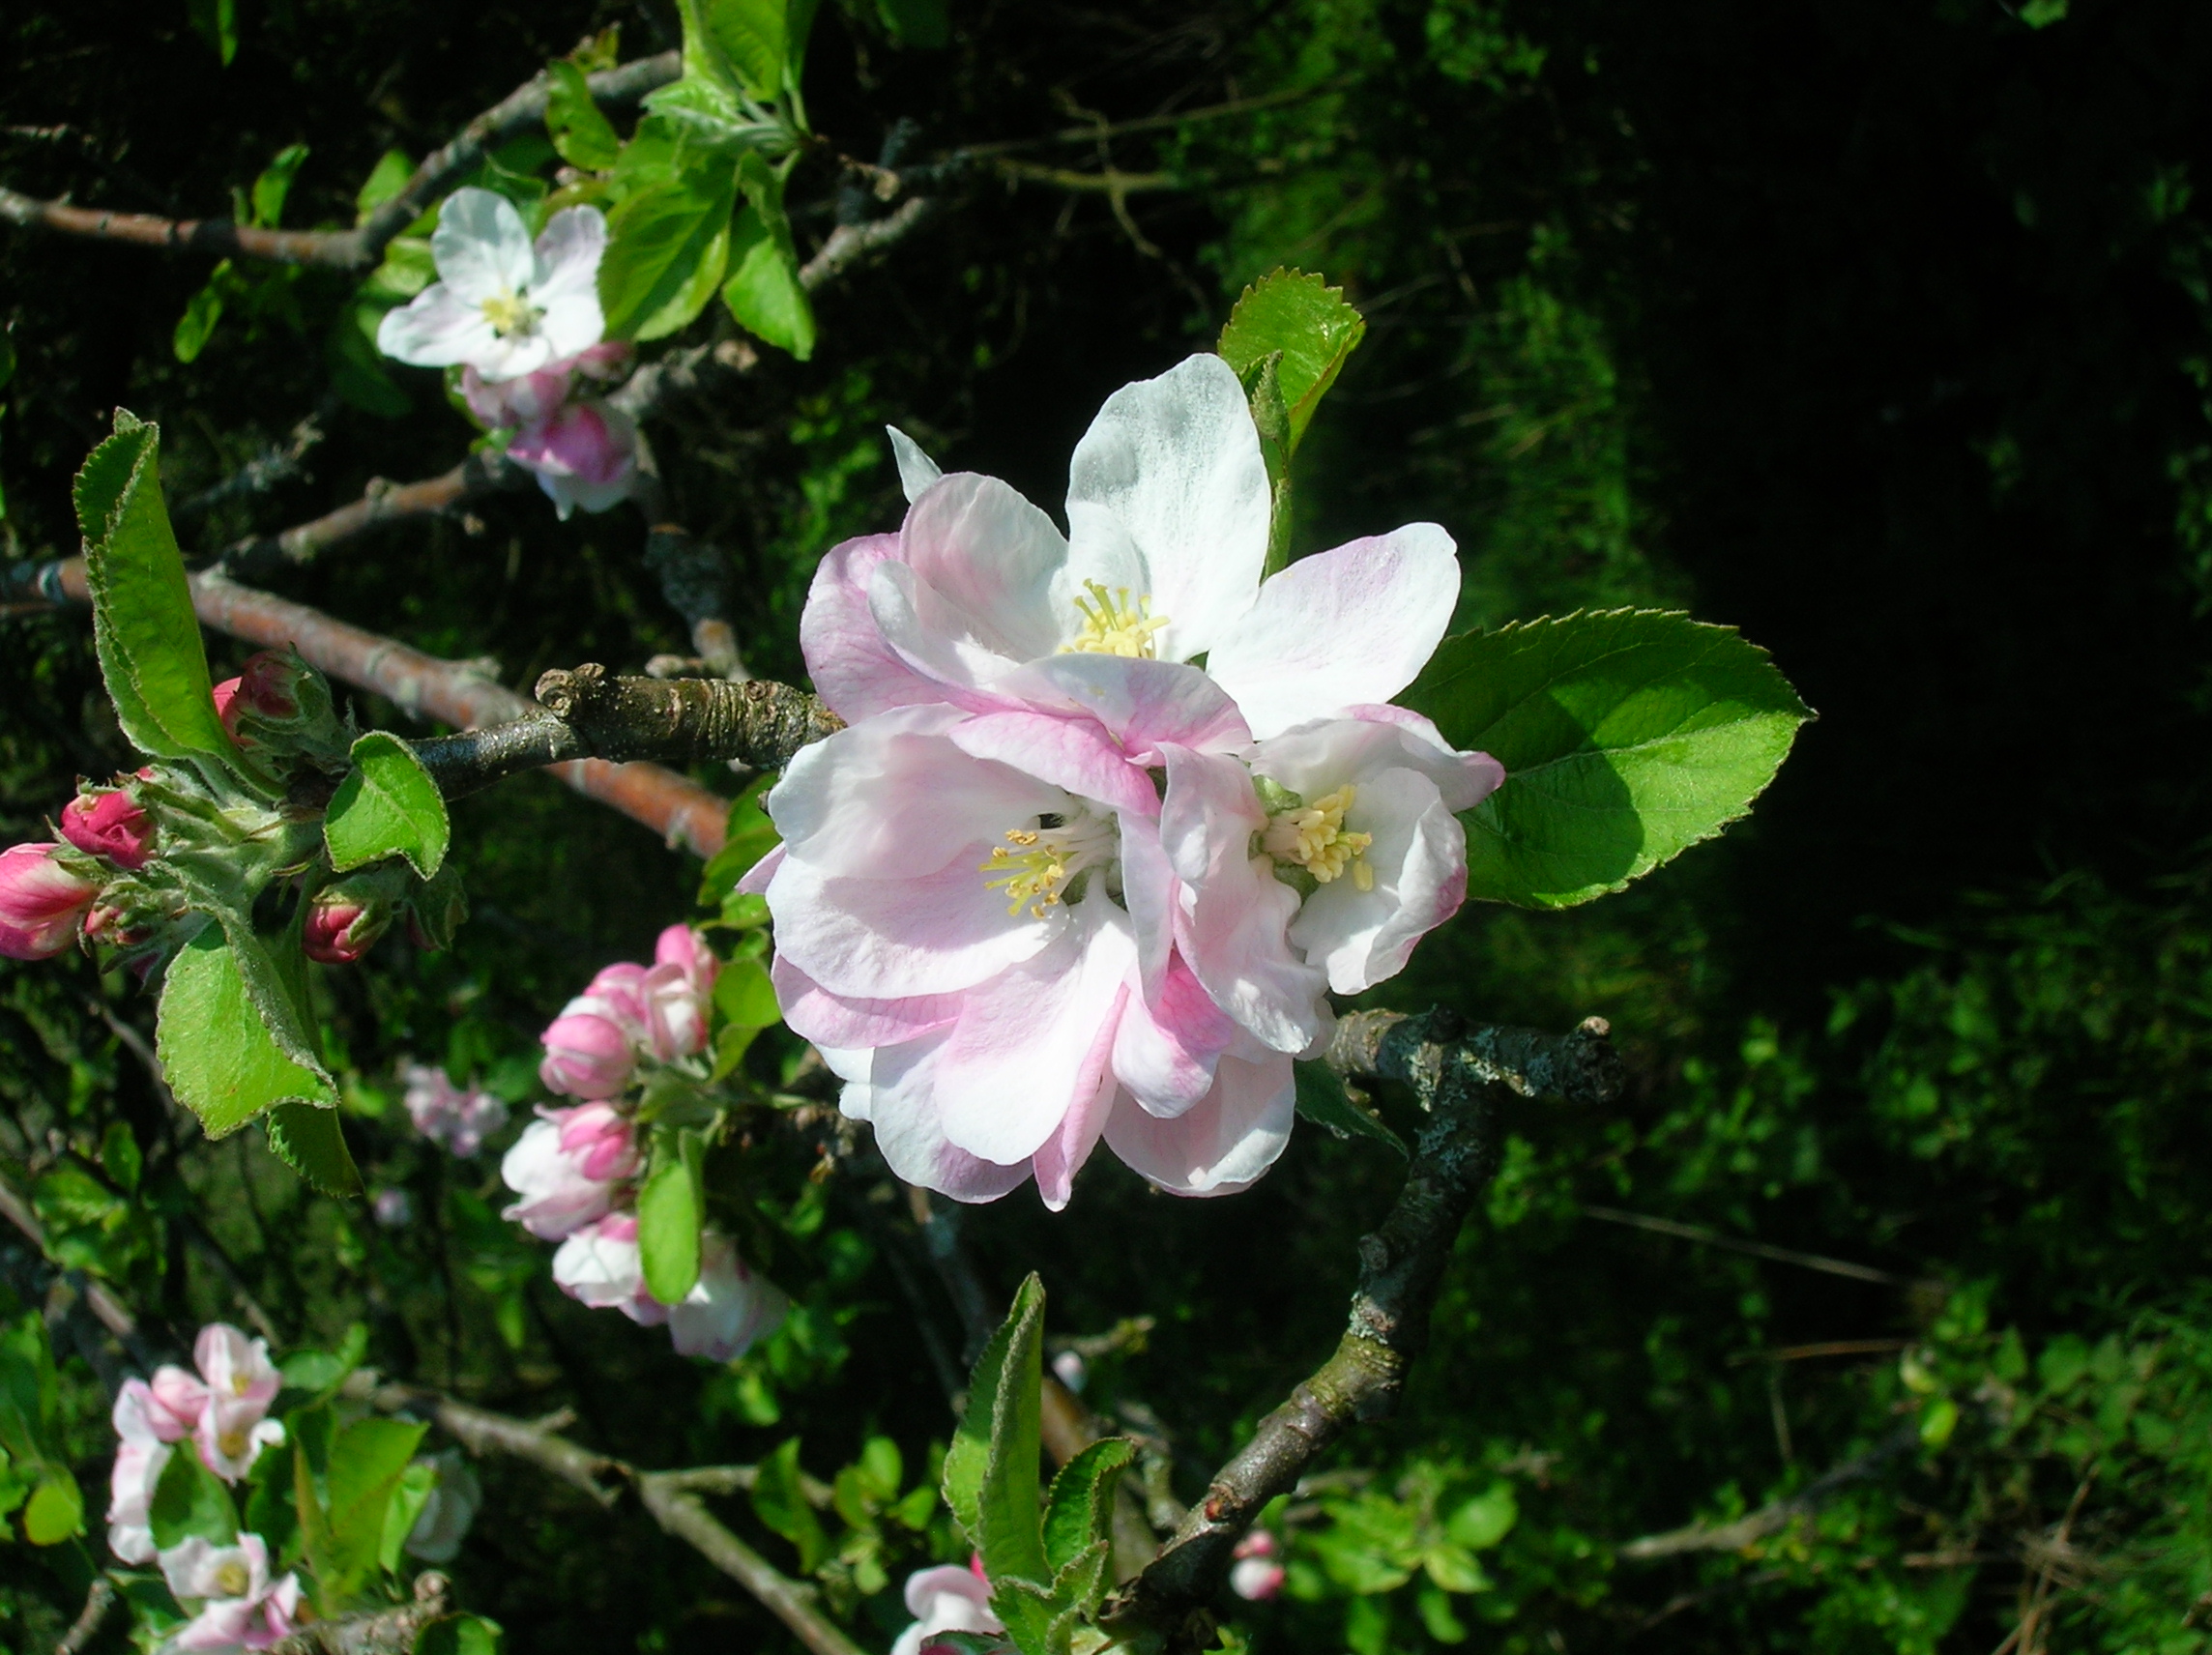 File:Apple tree blossom.JPG - Wikimedia Commons